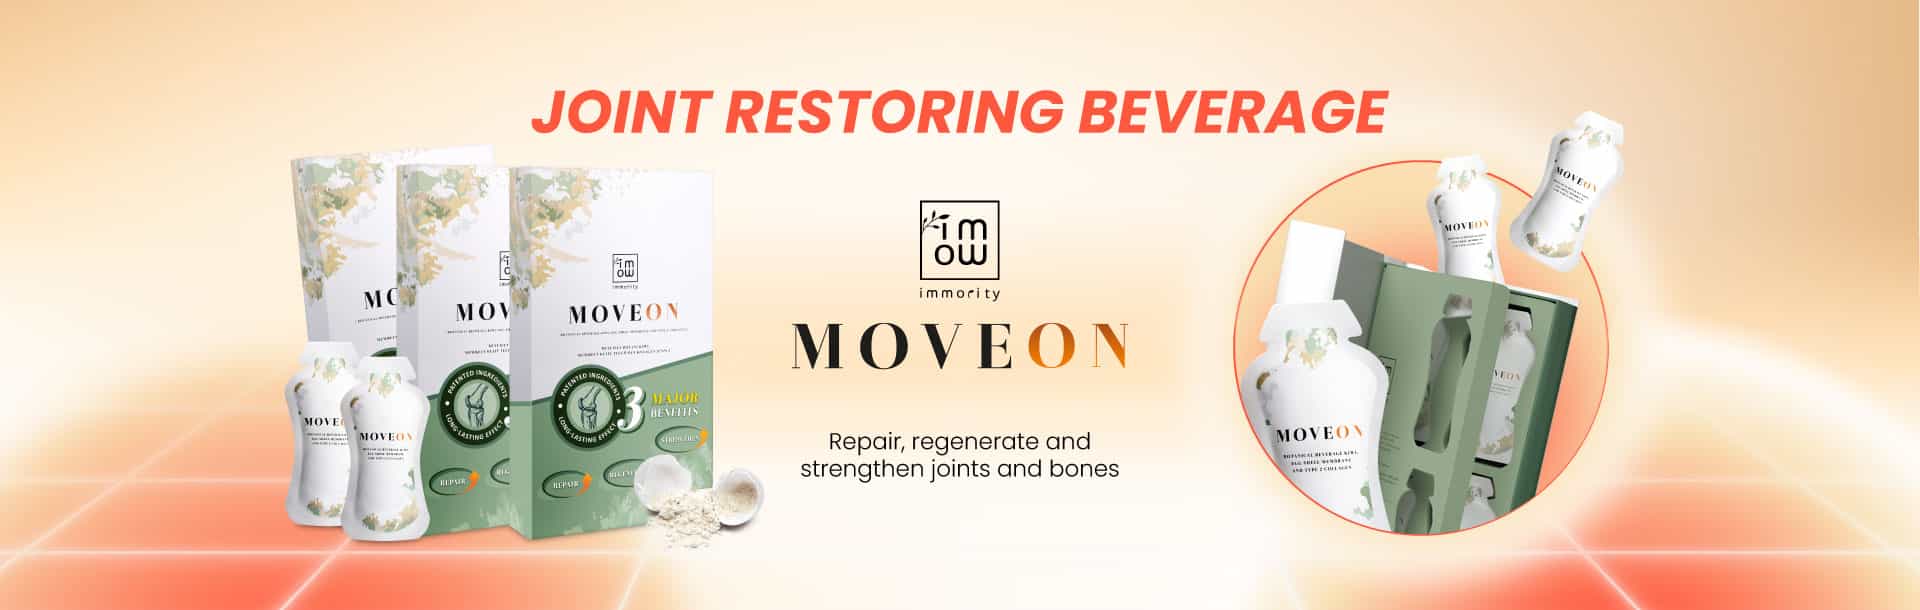 MOVEON - Joint Restoring Beverage